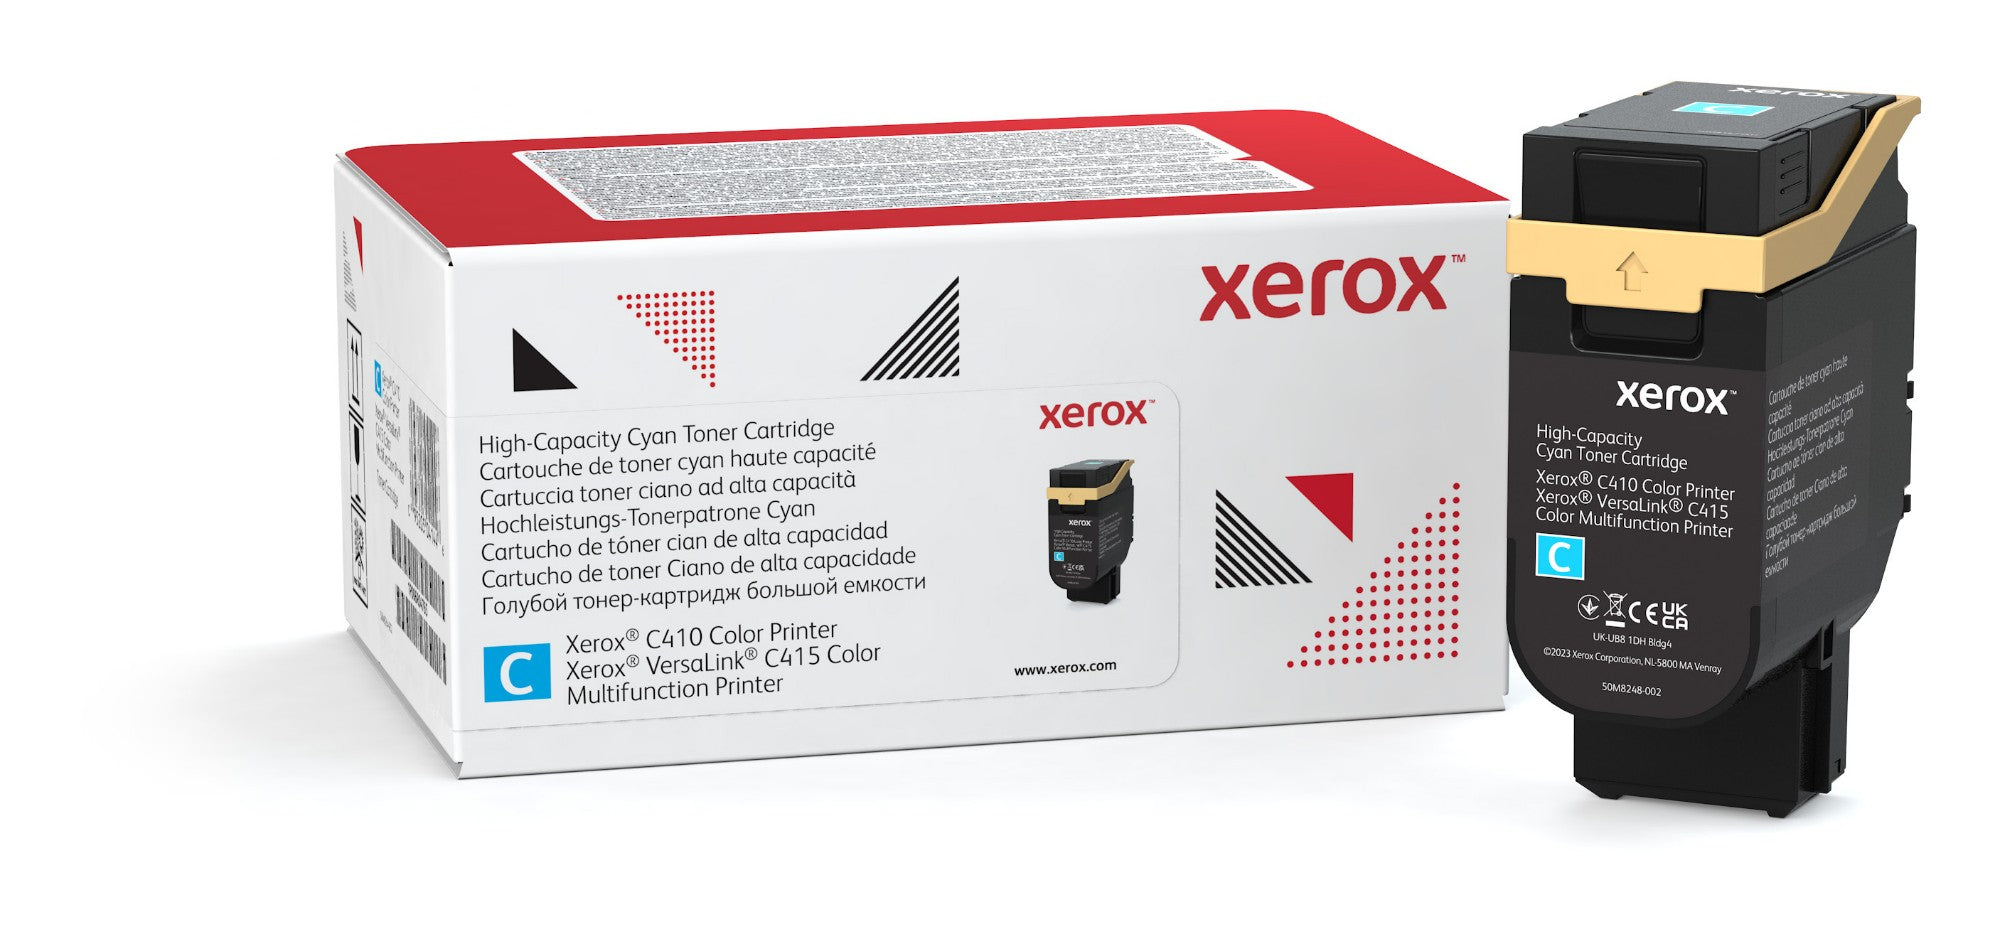 Xerox 006R04686 Toner-kit cyan high-capacity, 7K pages ISO/IEC 19752 for Xerox VersaLink C 410